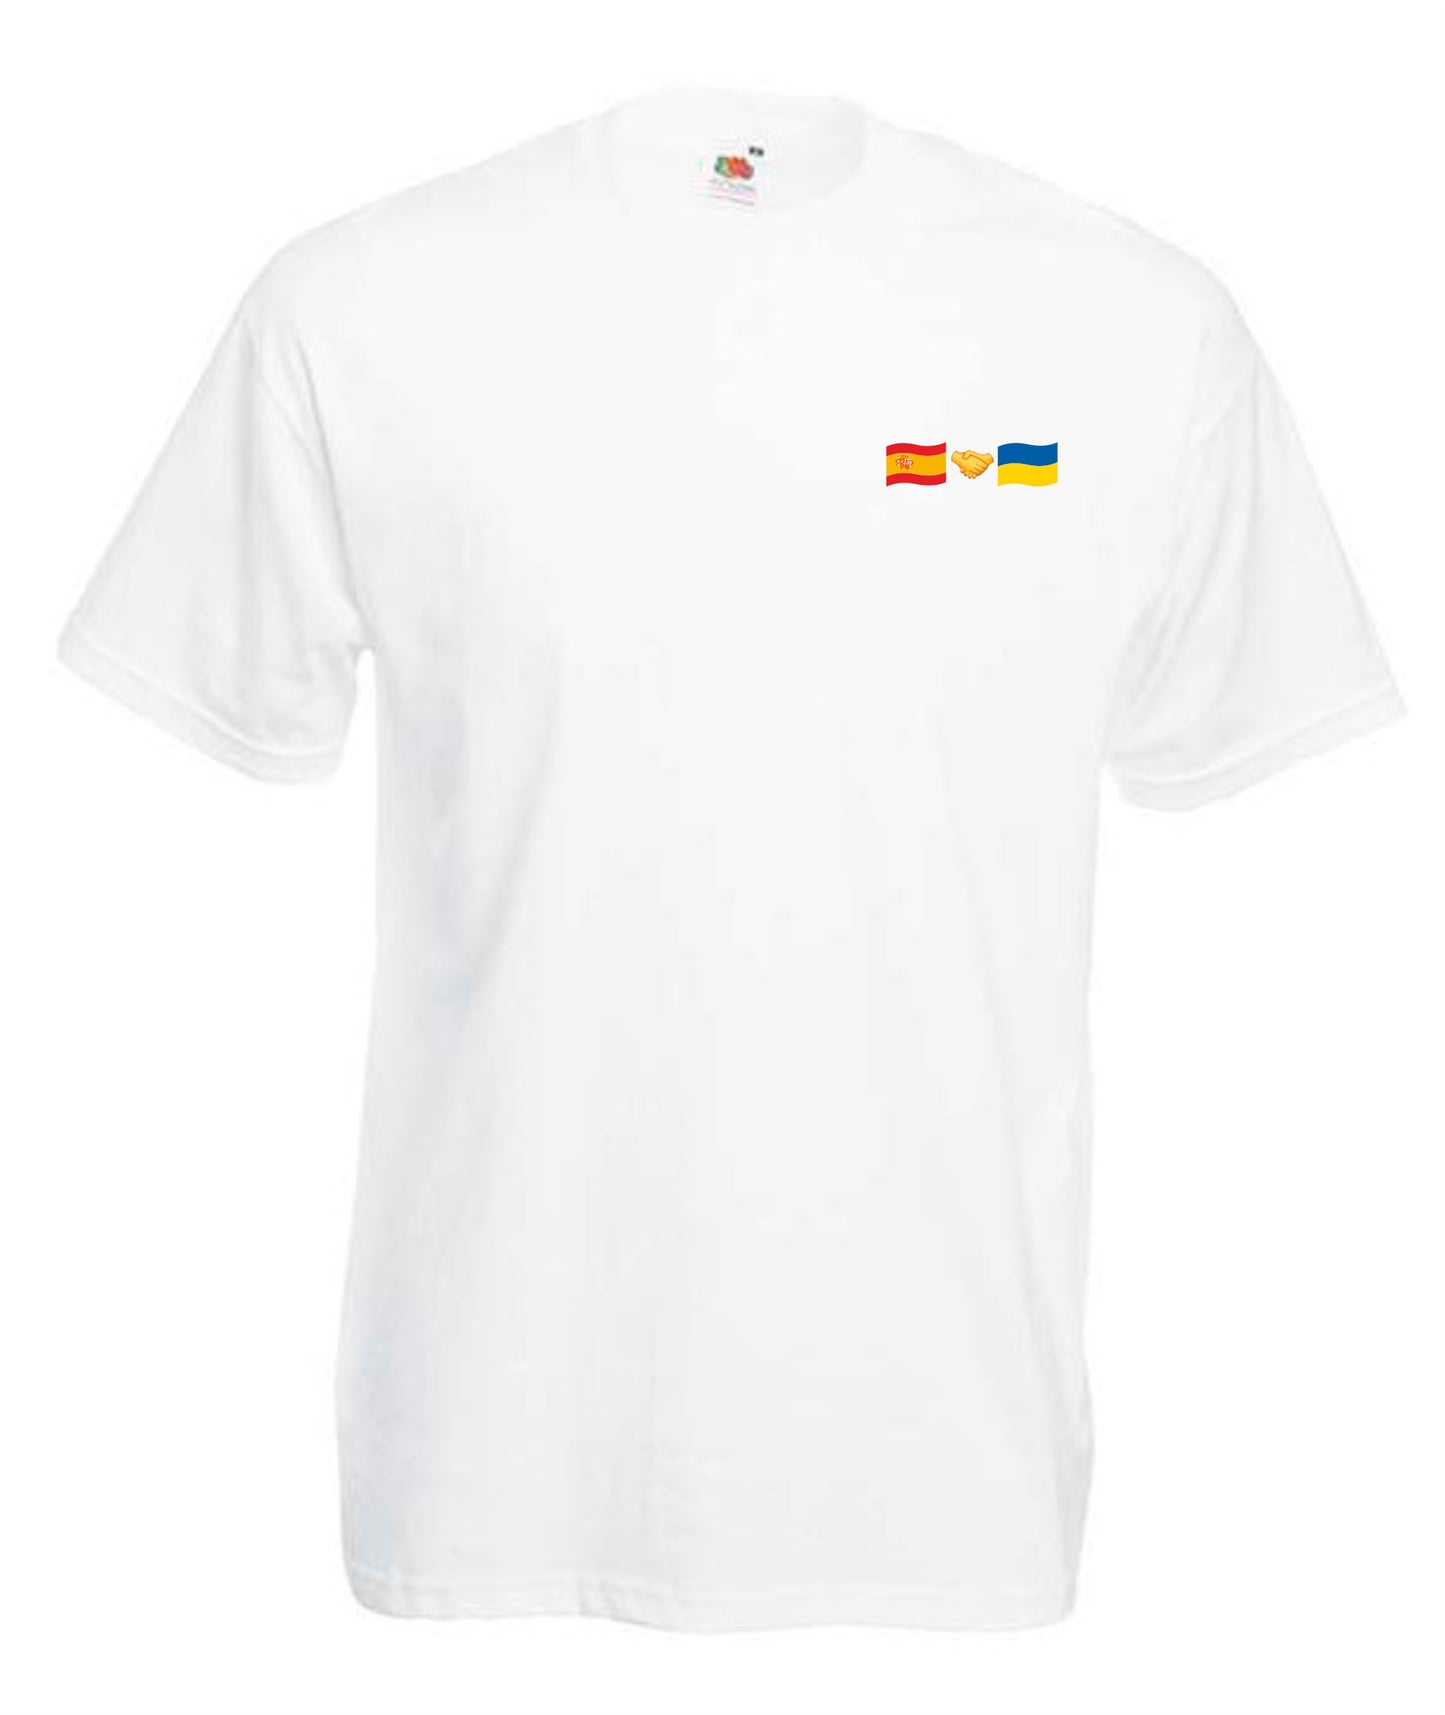 T-shirt Spain + Ukraine (small logo)